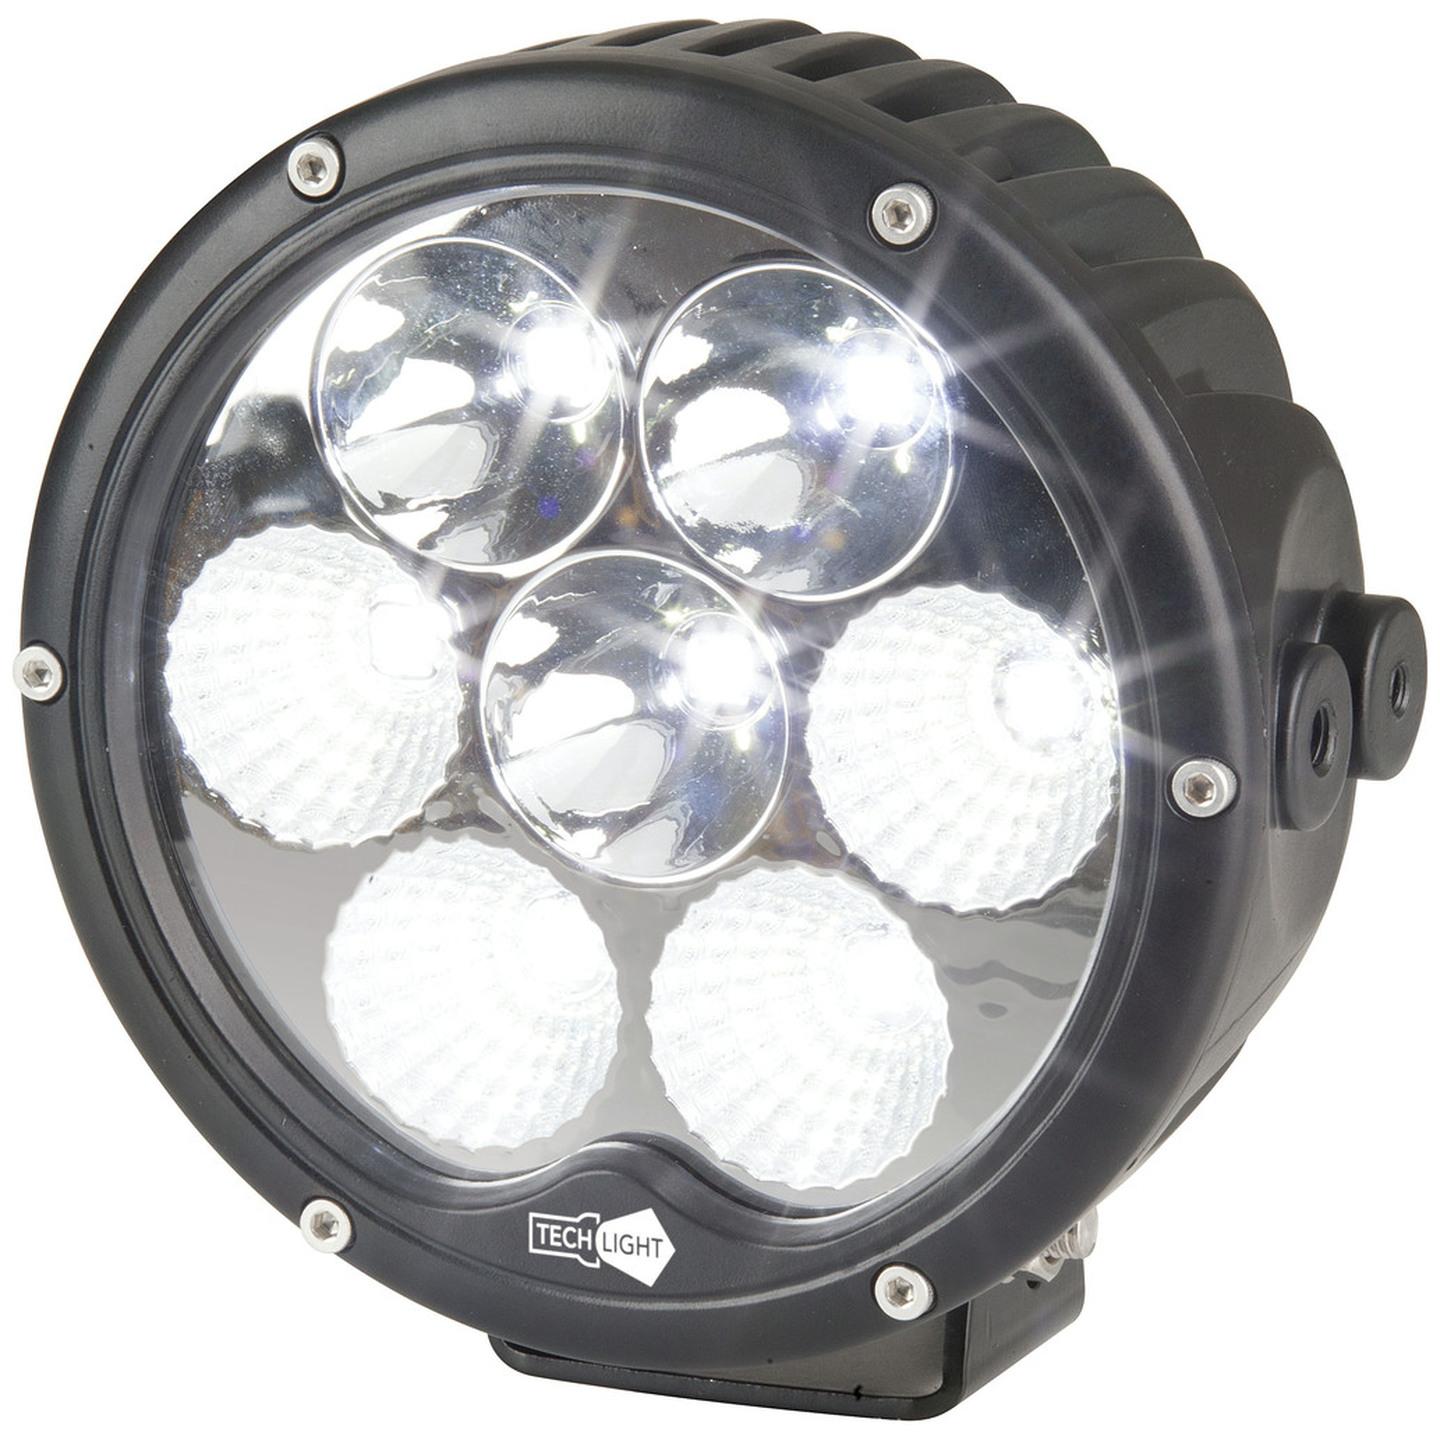 6300 Lumen 6.5 Inch Solid LED Driving Light